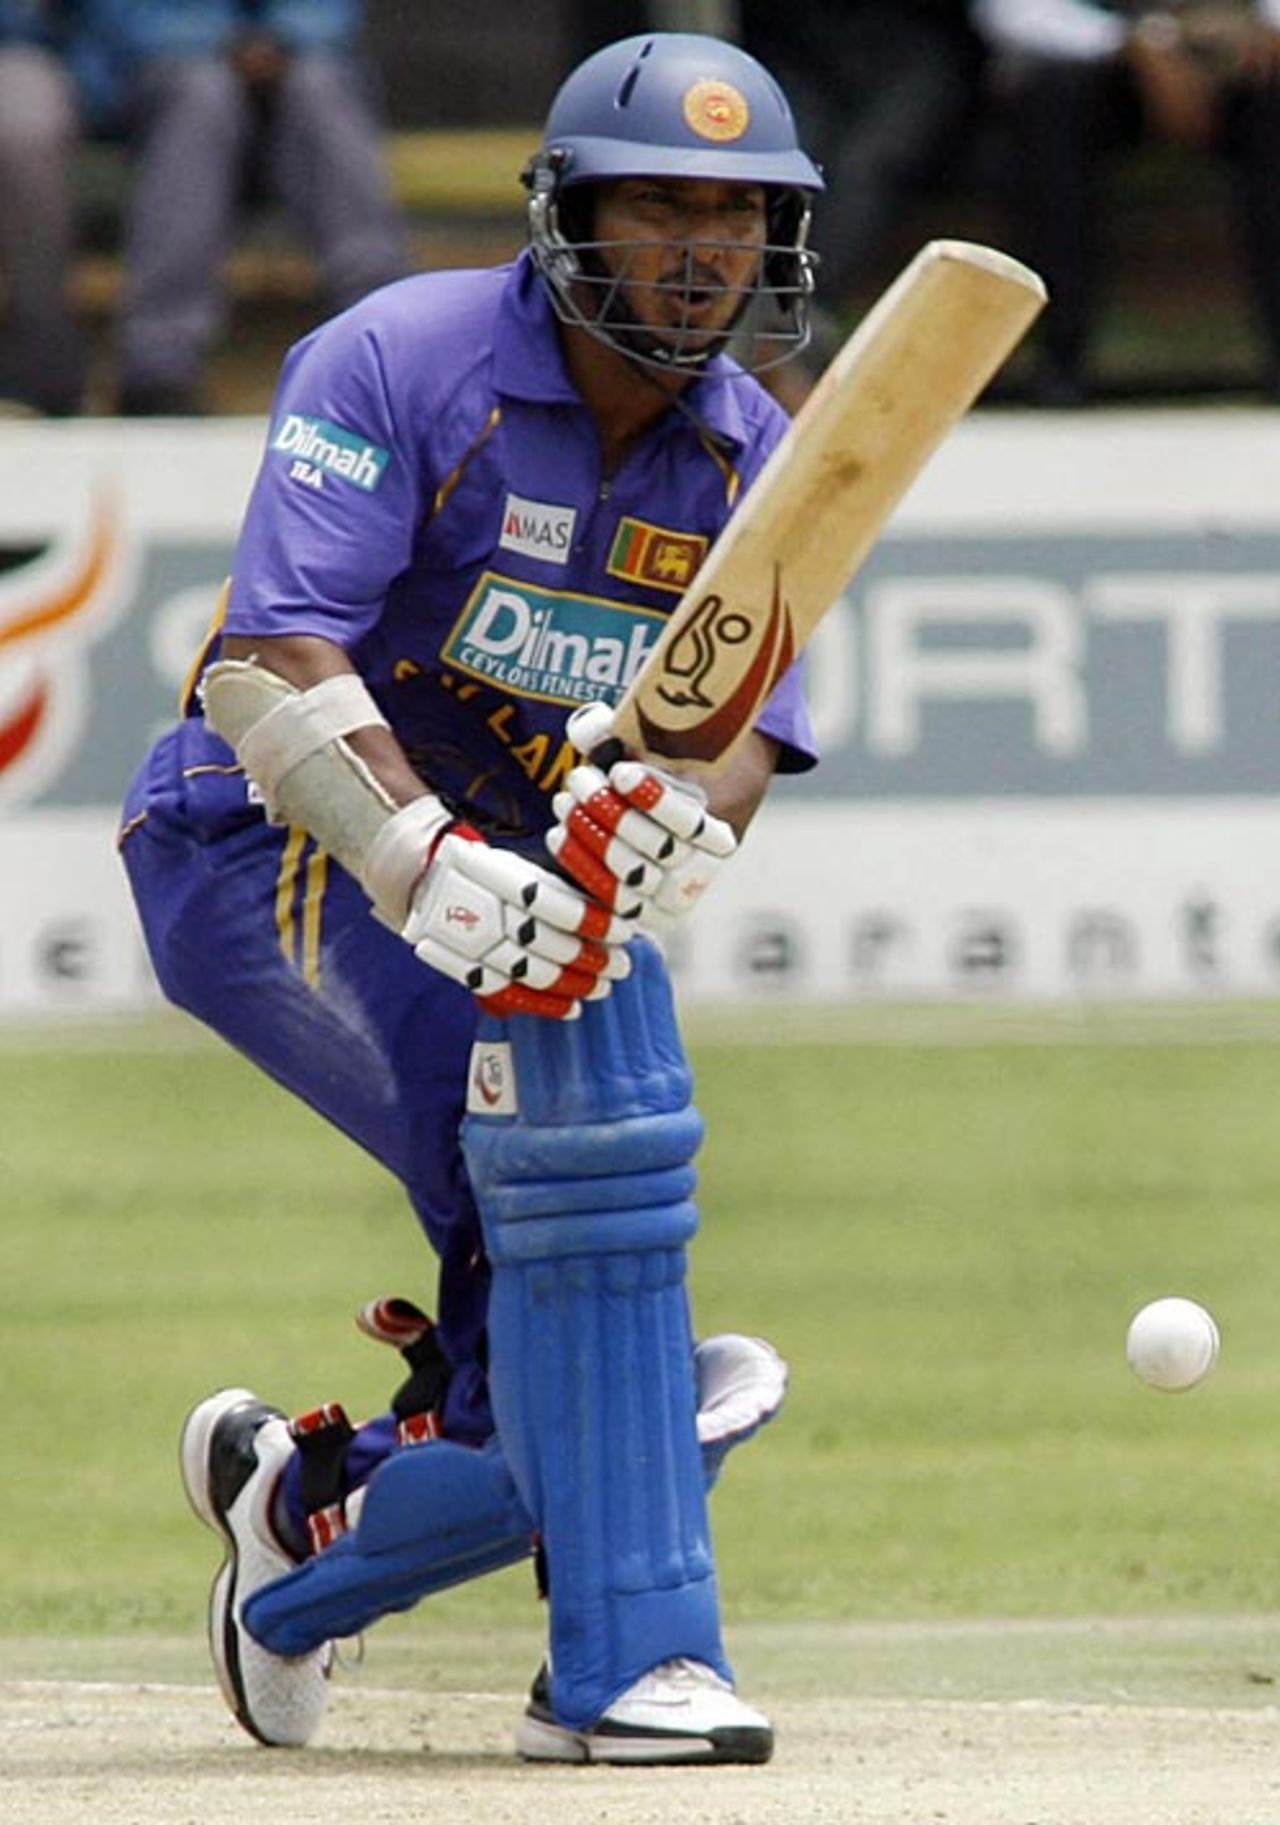 Kumar Sangakkara scored 46 not out, Zimbabwe v Sri Lanka, 1st ODI, Harare, November 20, 2008